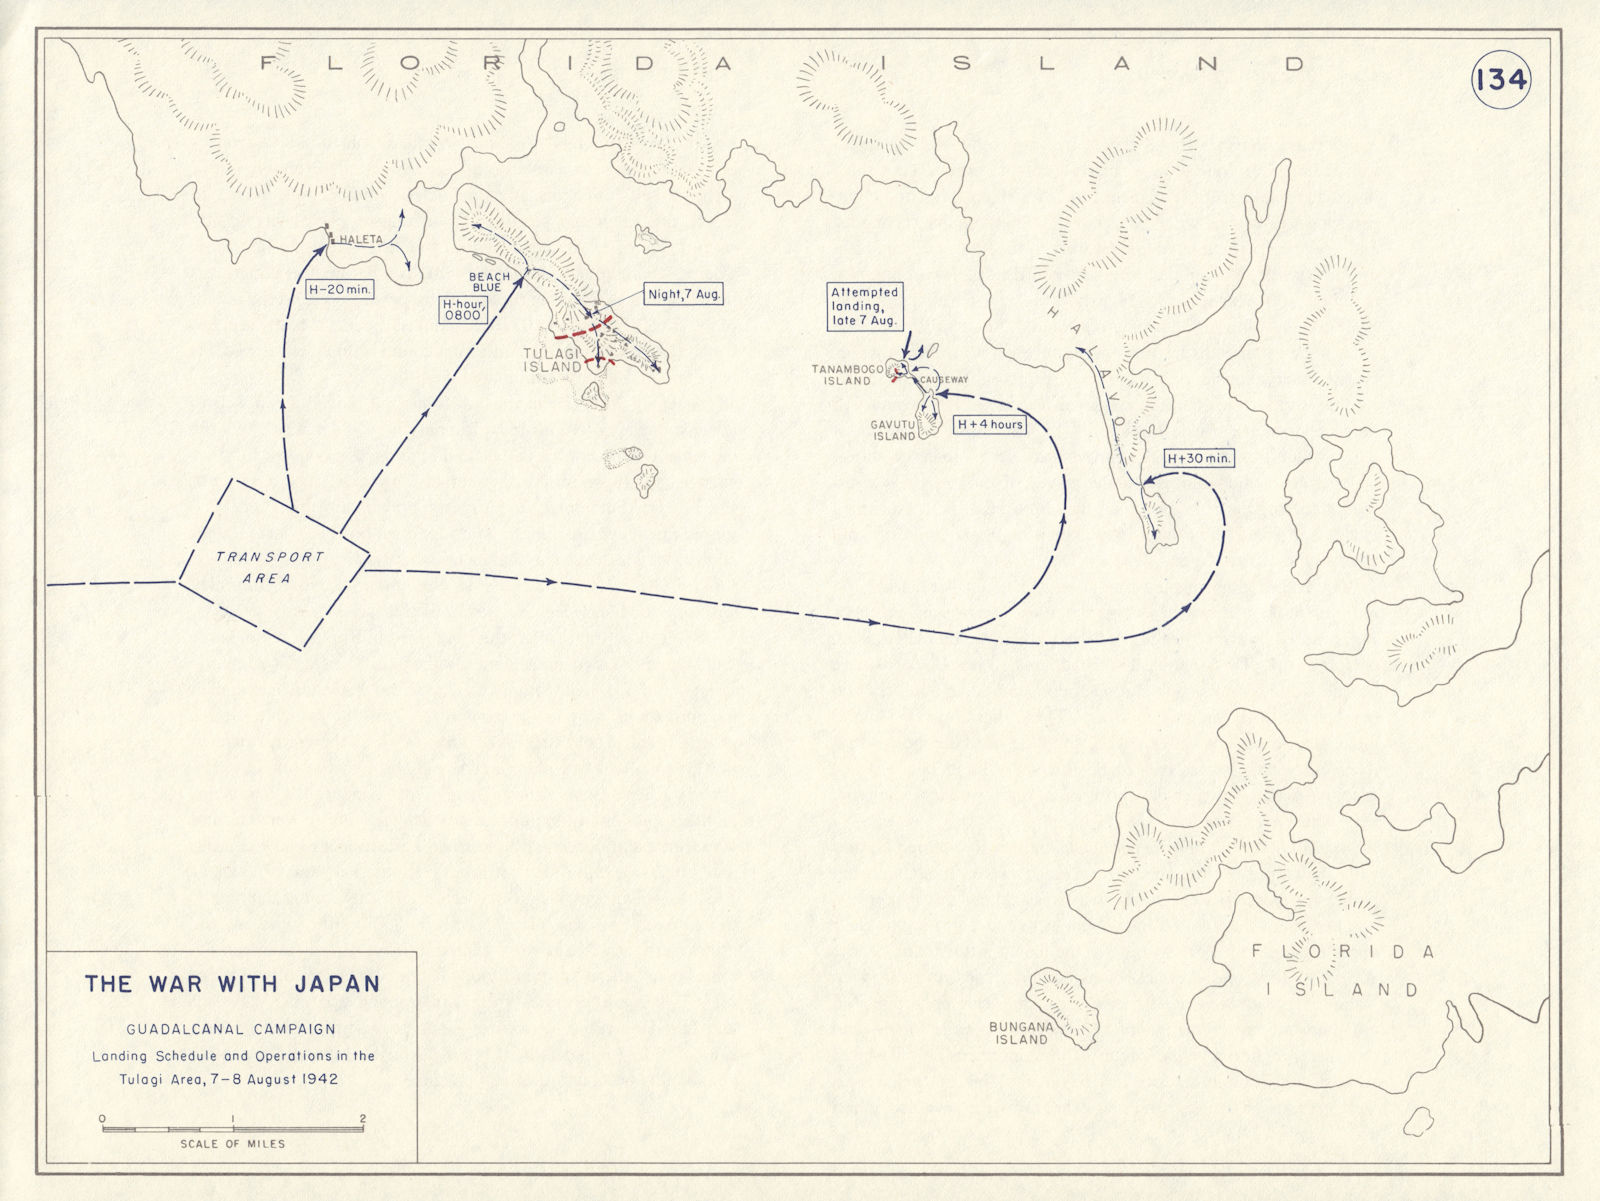 World War 2. Guadalcanal Campaign 7-8 Aug 1942 Tulagi Landing Schedule 1959 map